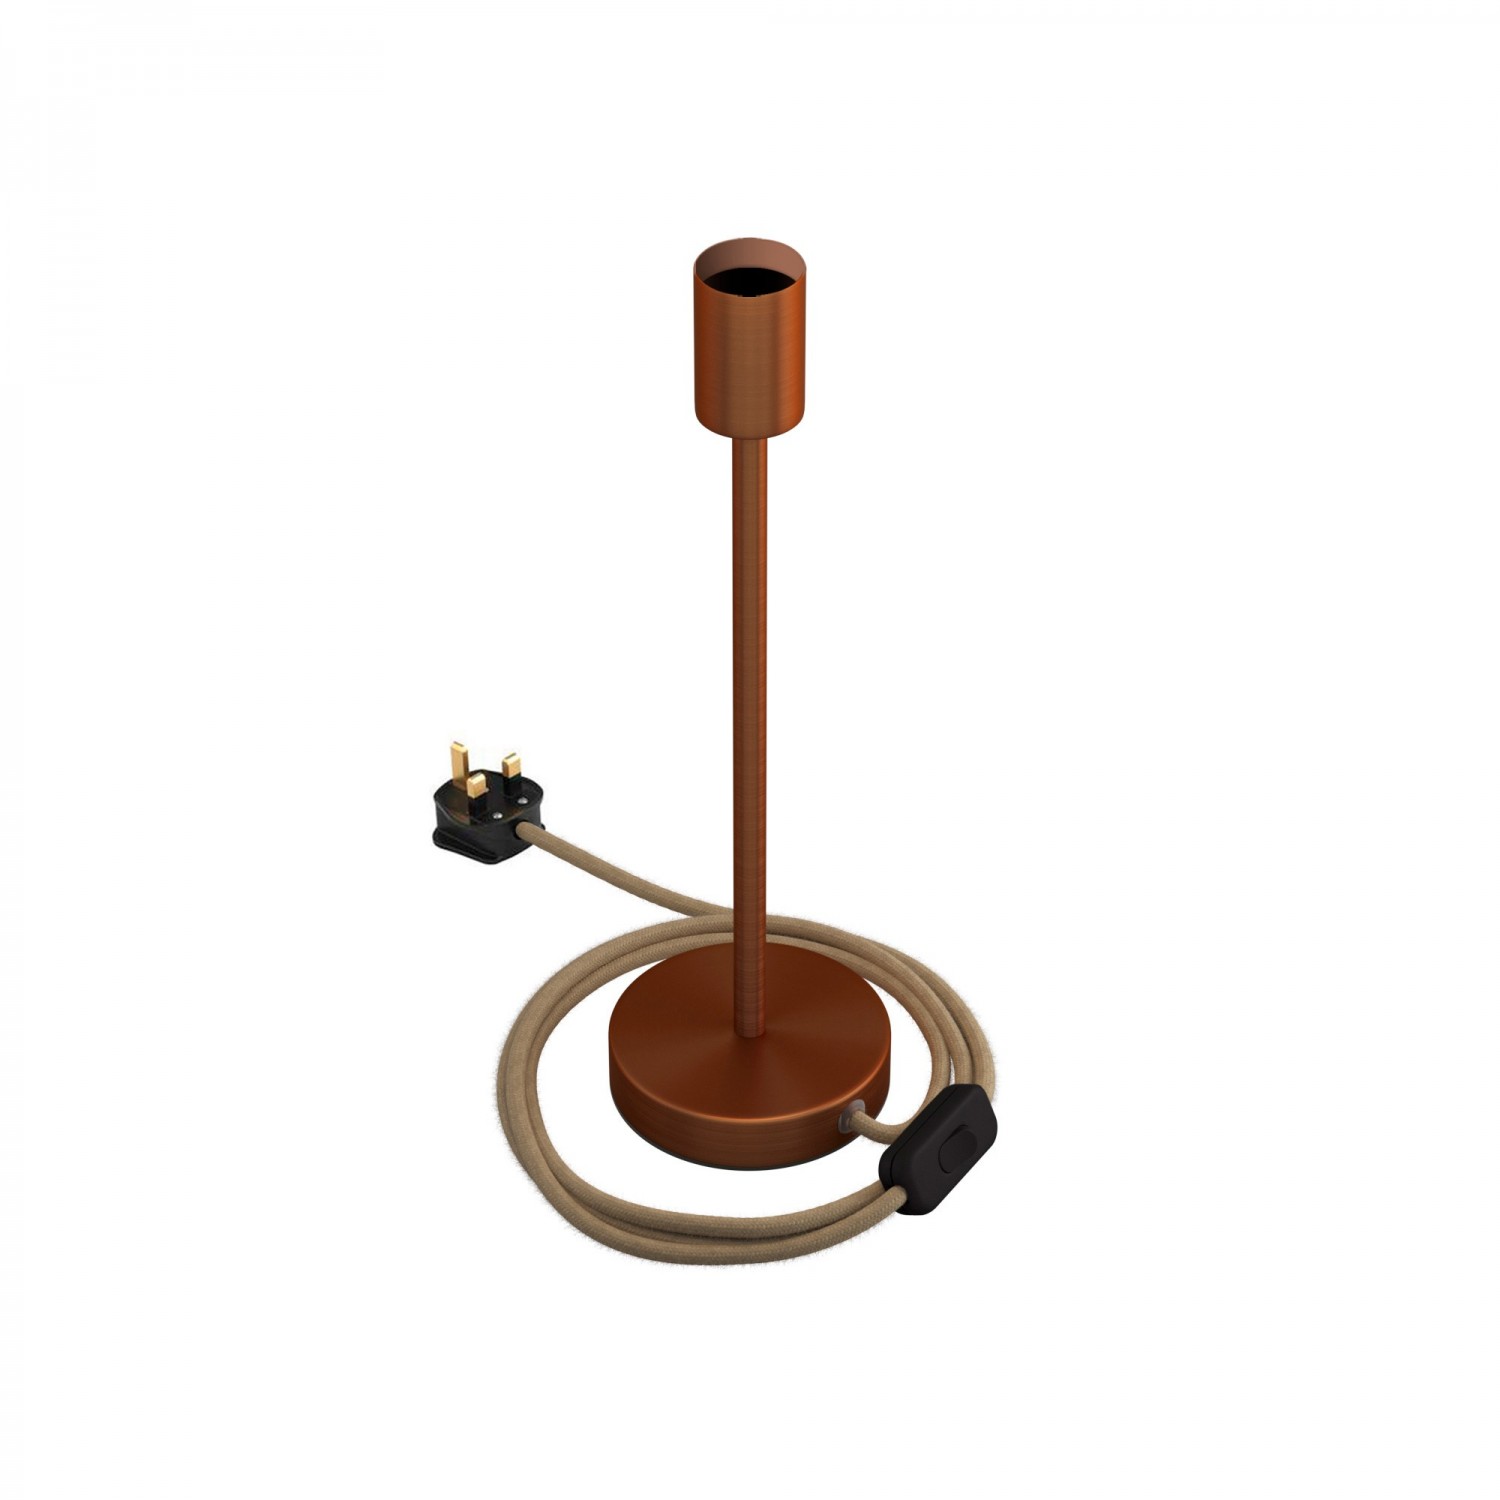 Alzaluce - Metal table lamp with UK plug